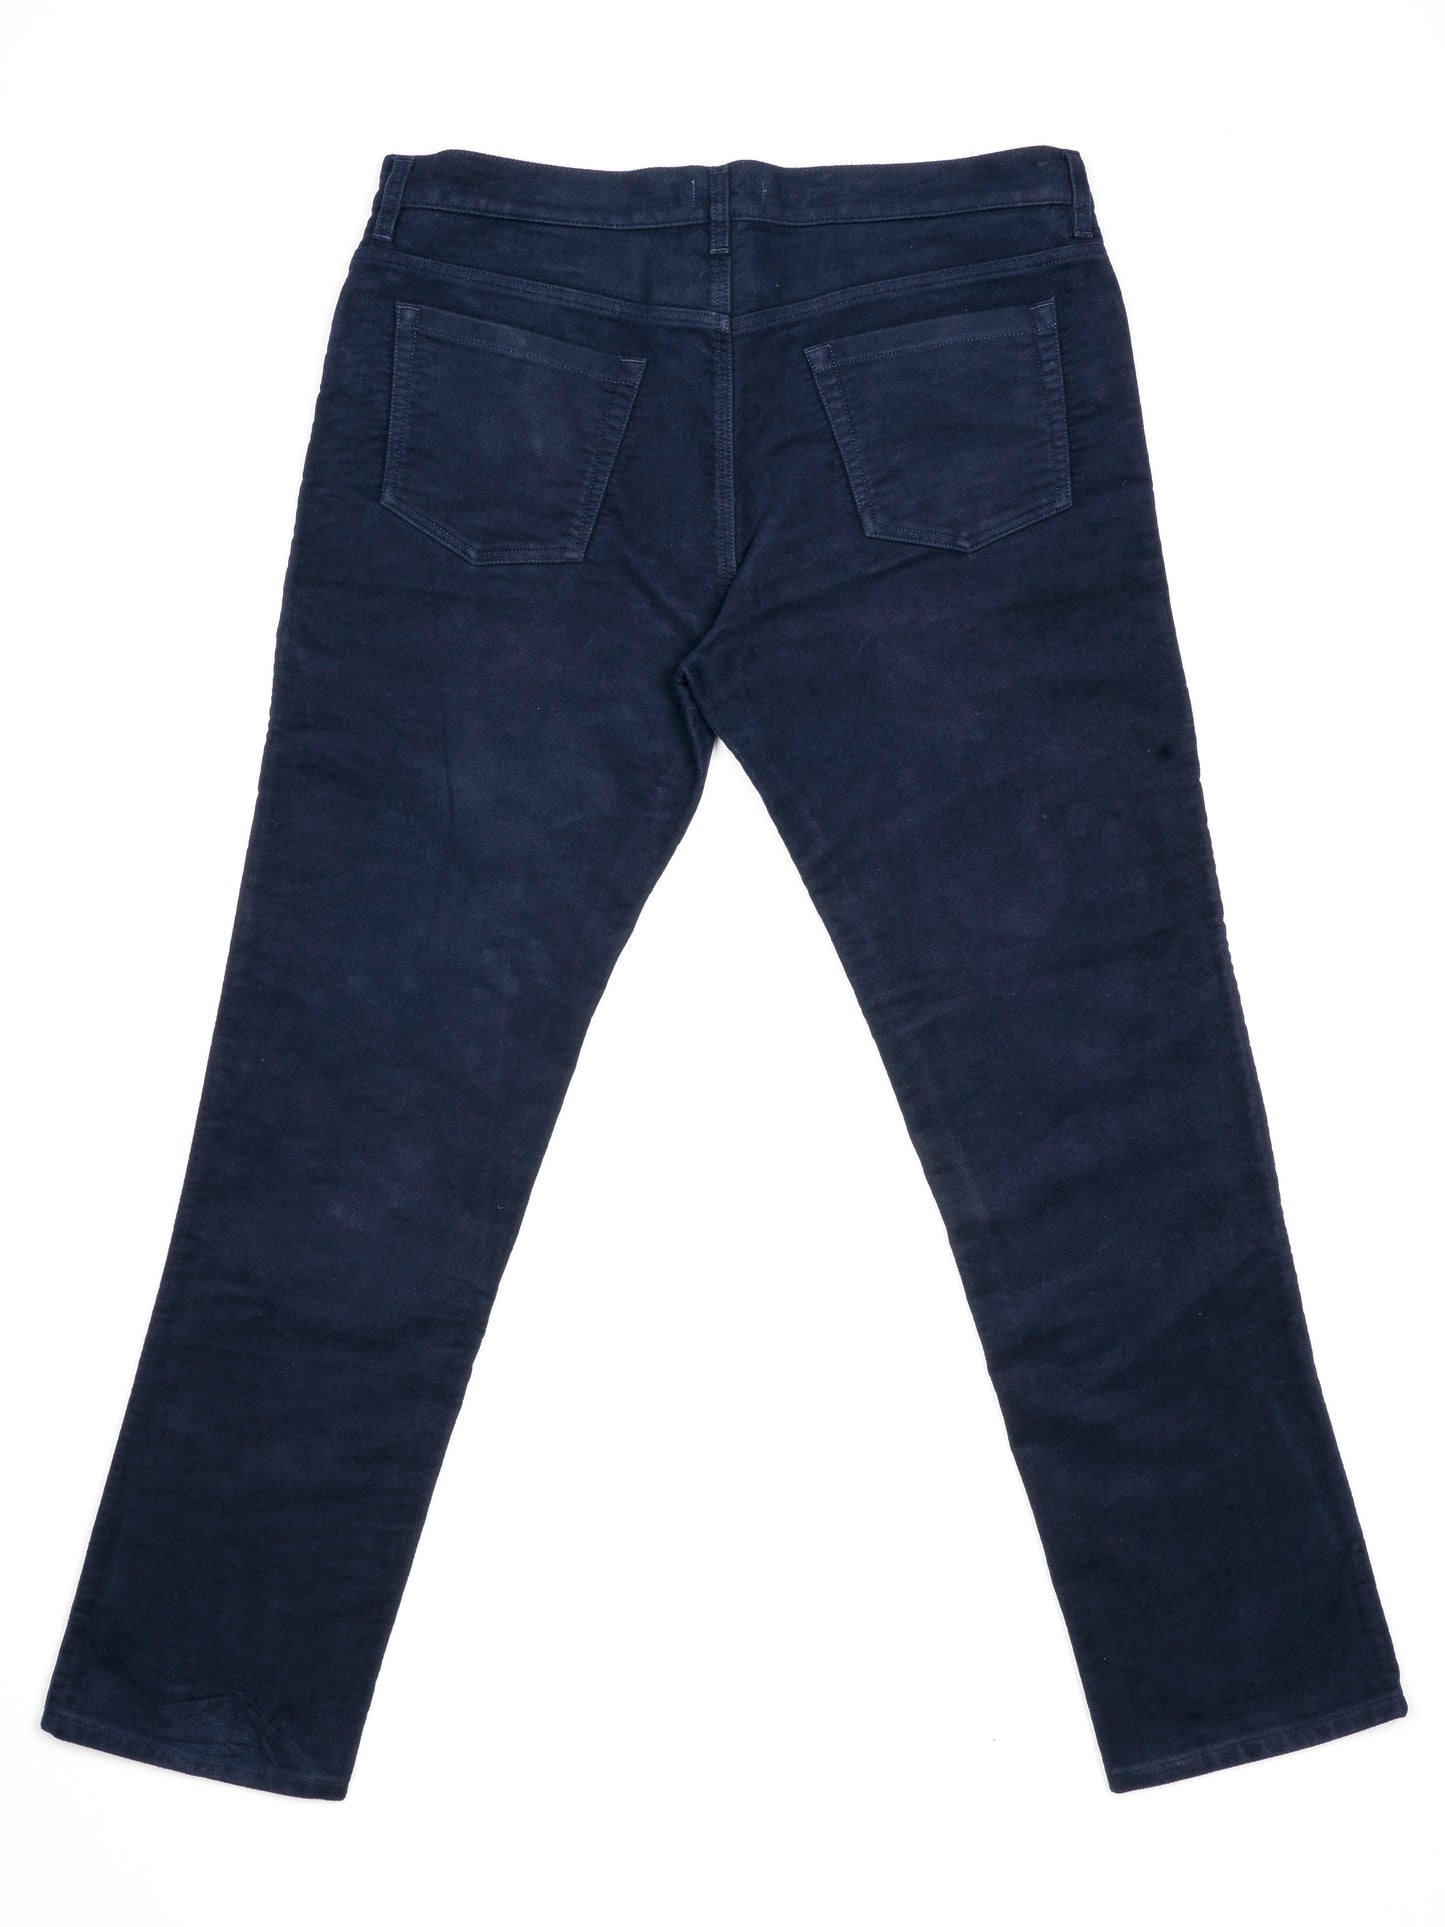 Blackshore Moleskin Jeans